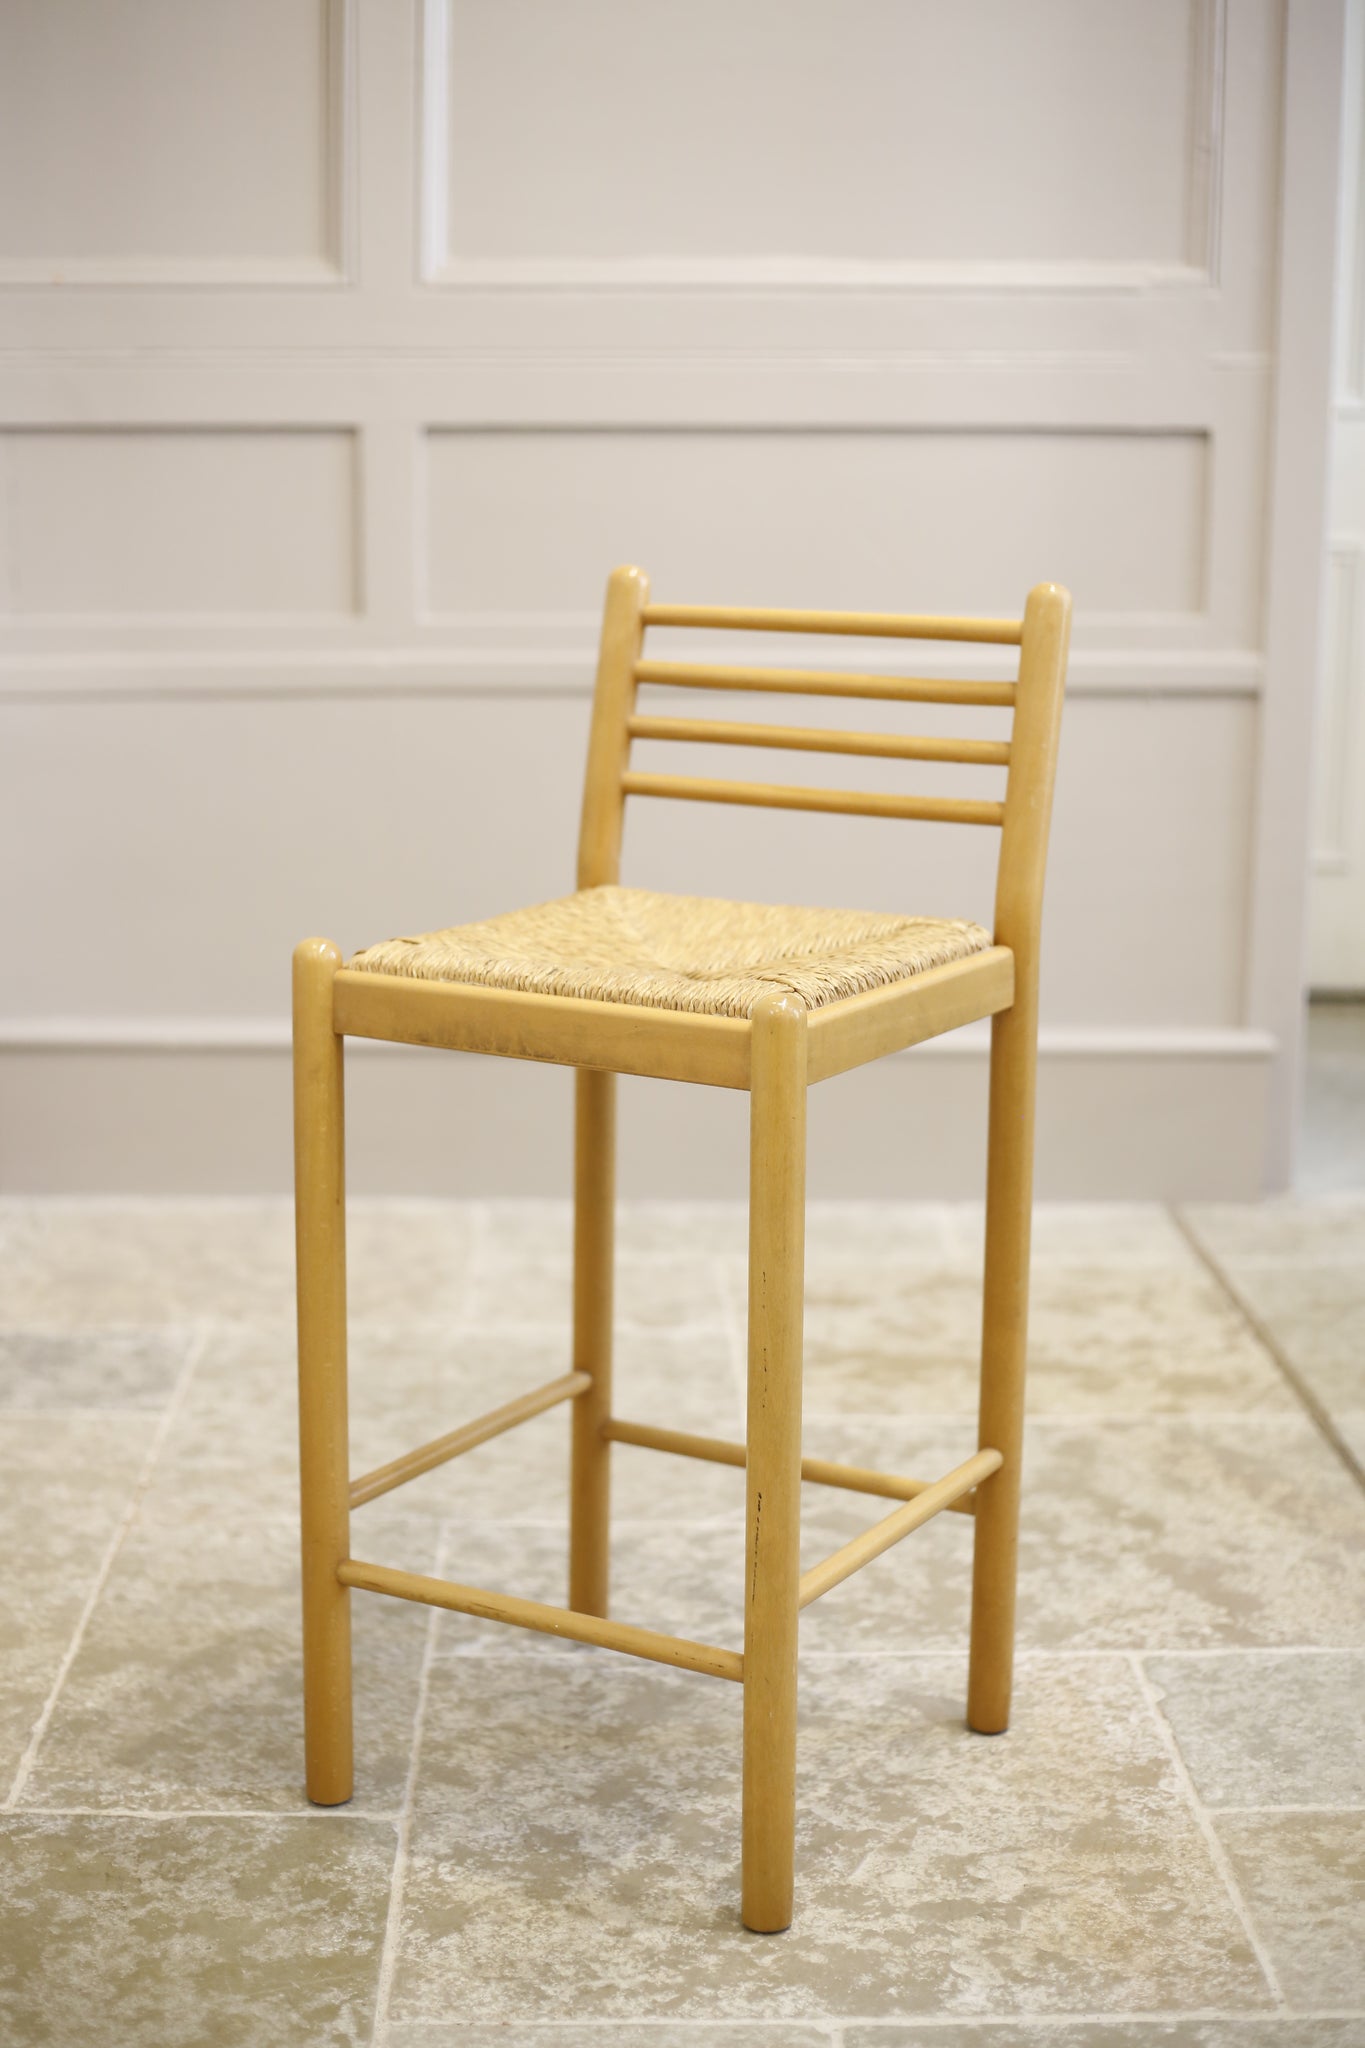 4x Mid century blonde wood and rush seated bar stools - TallBoy Interiors